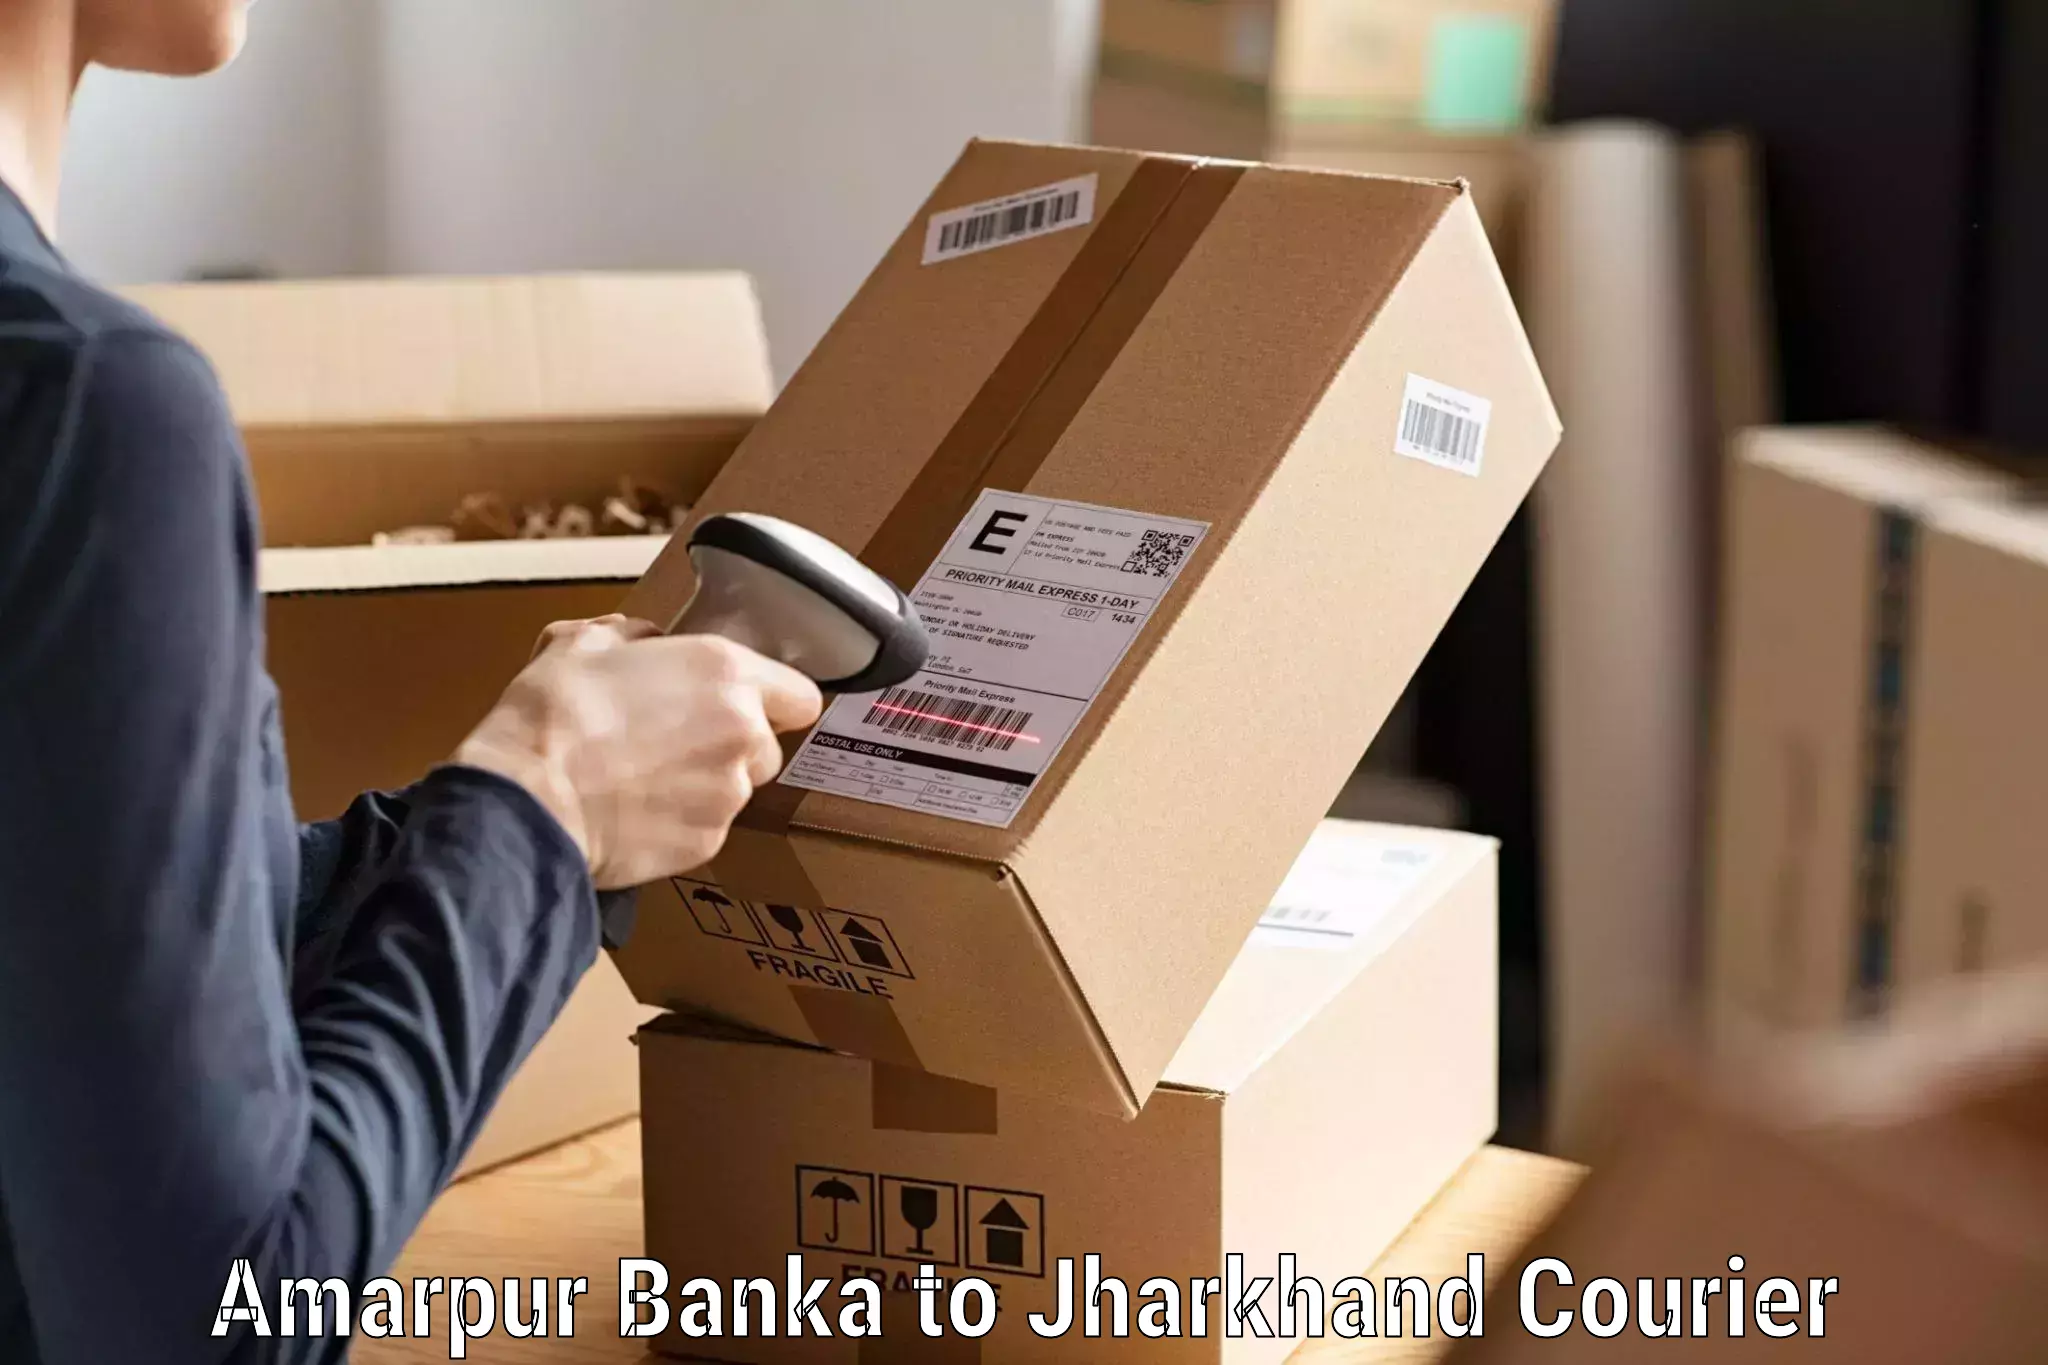 Digital courier platforms Amarpur Banka to Chakradharpur